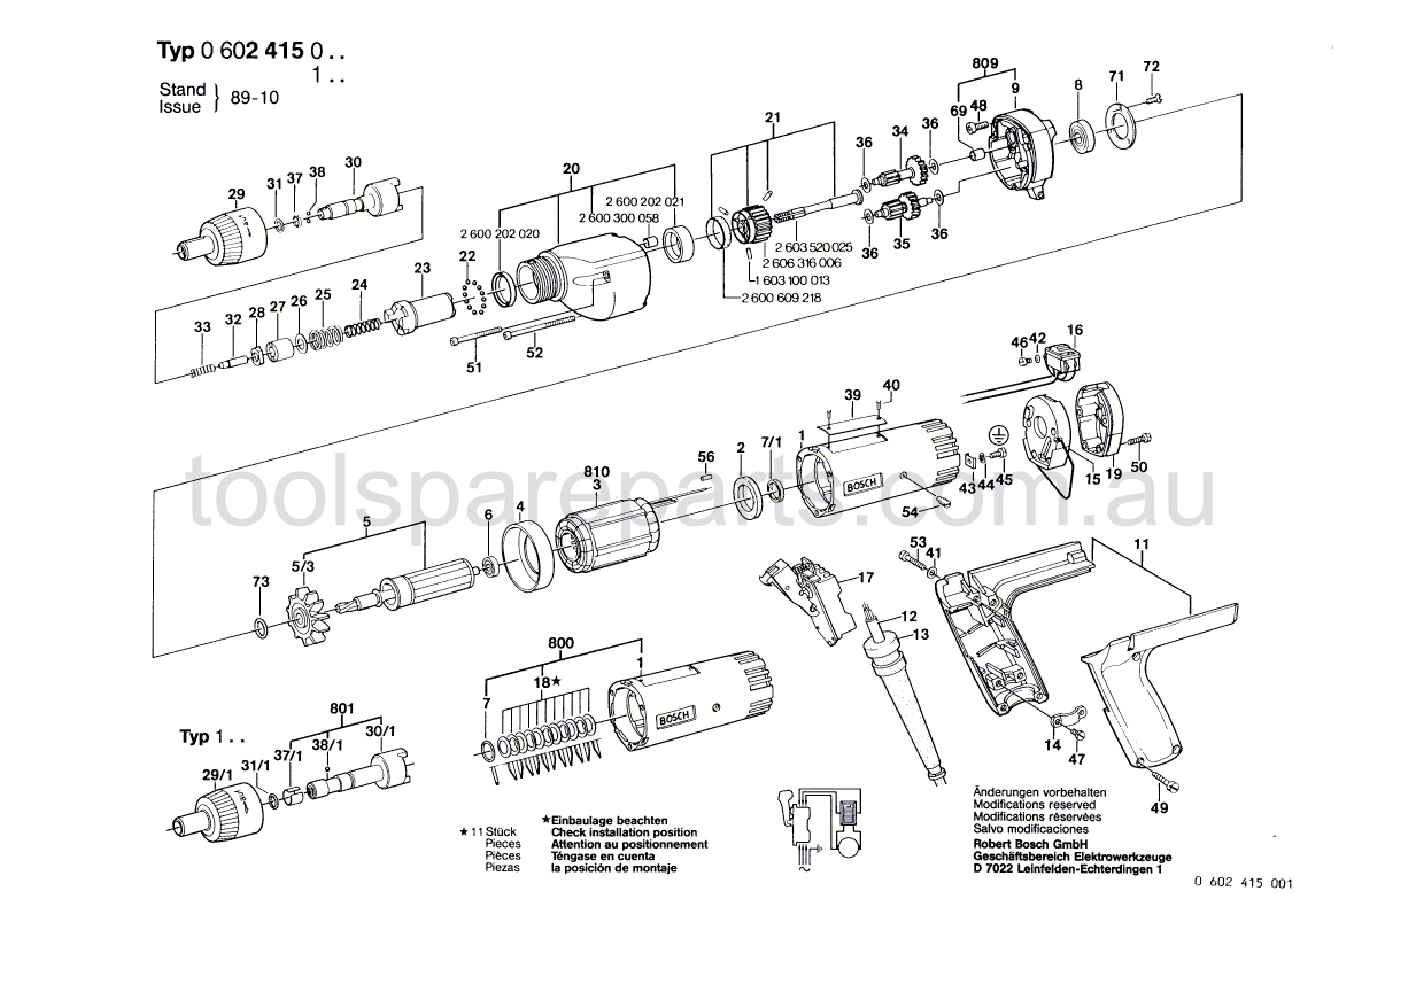 Bosch ---- 0602415001  Diagram 1